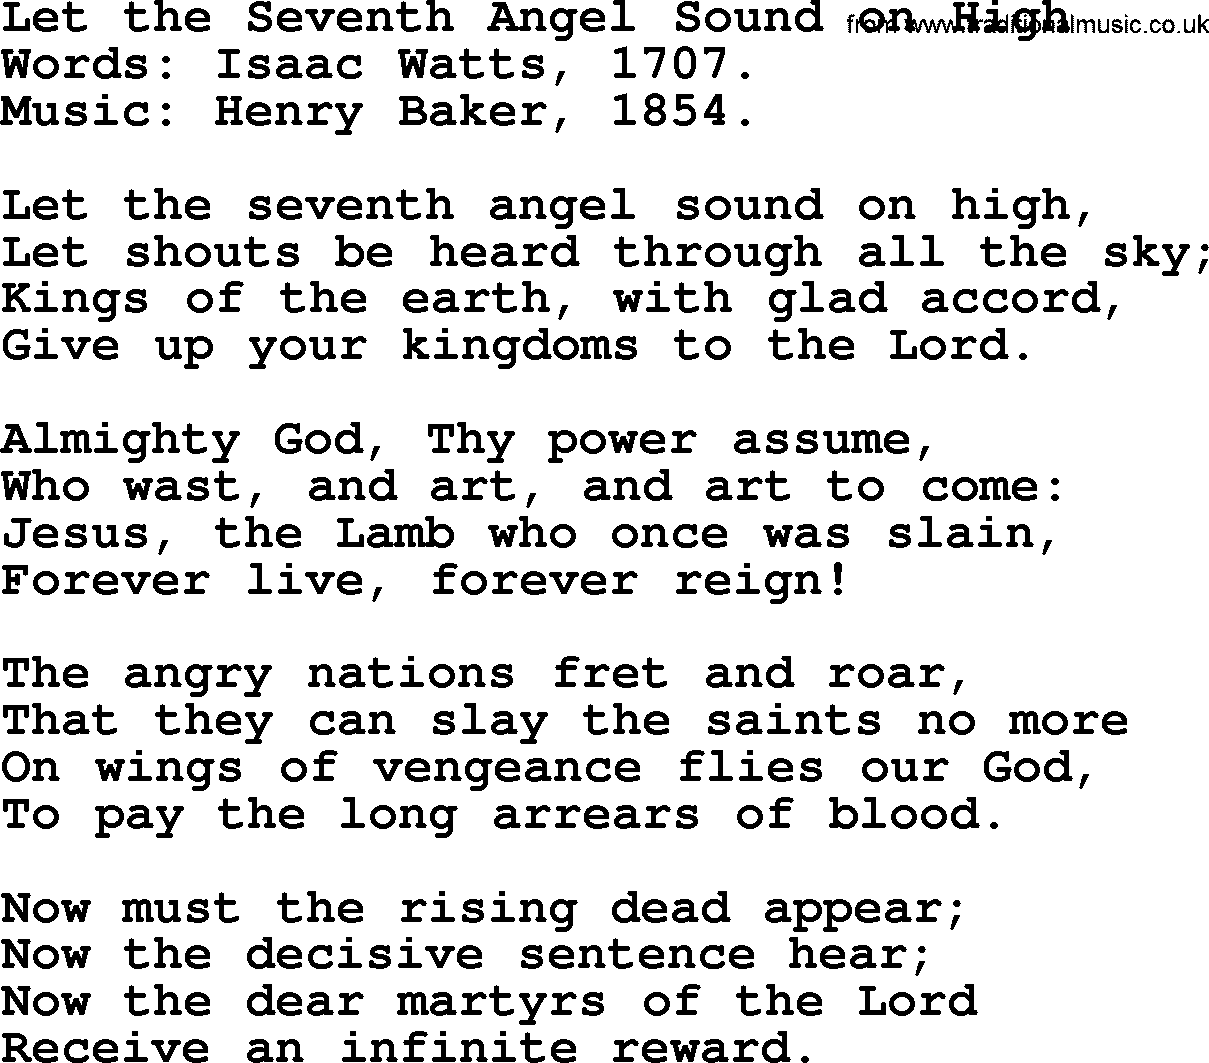 Isaac Watts Christian hymn: Let the Seventh Angel Sound on High- lyricss